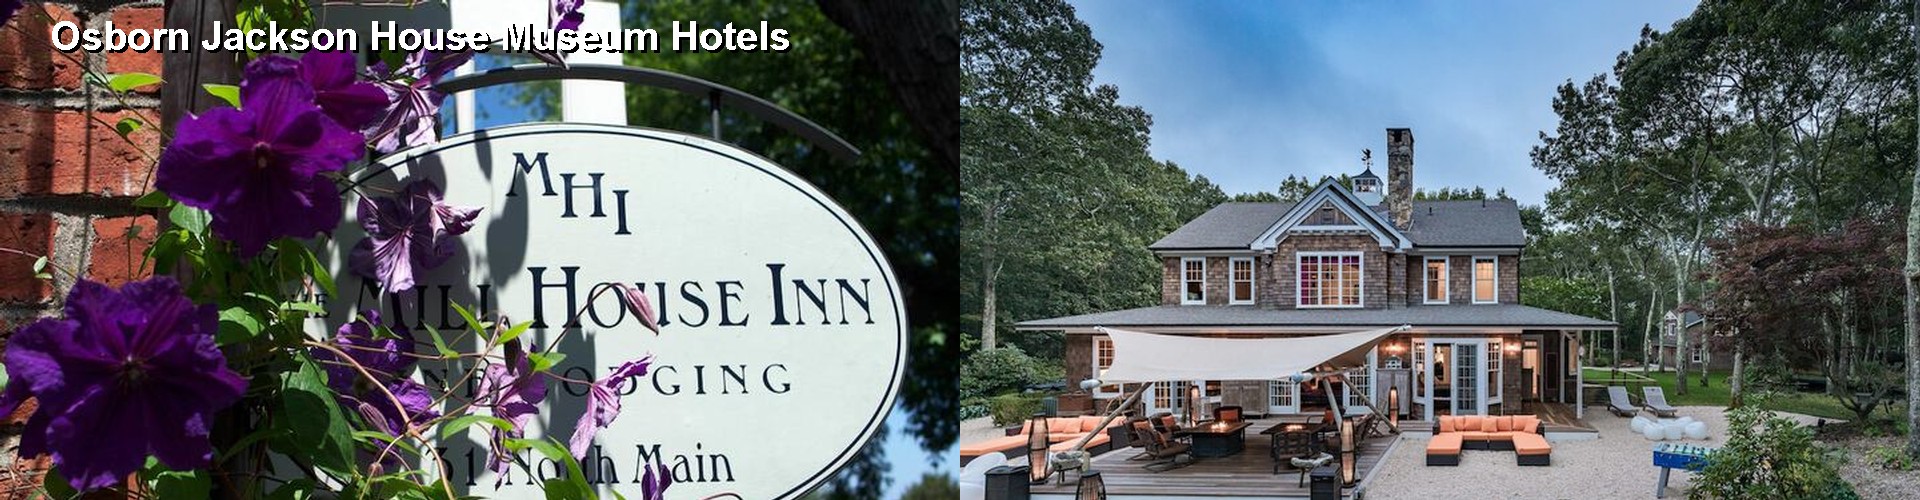 5 Best Hotels near Osborn Jackson House Museum